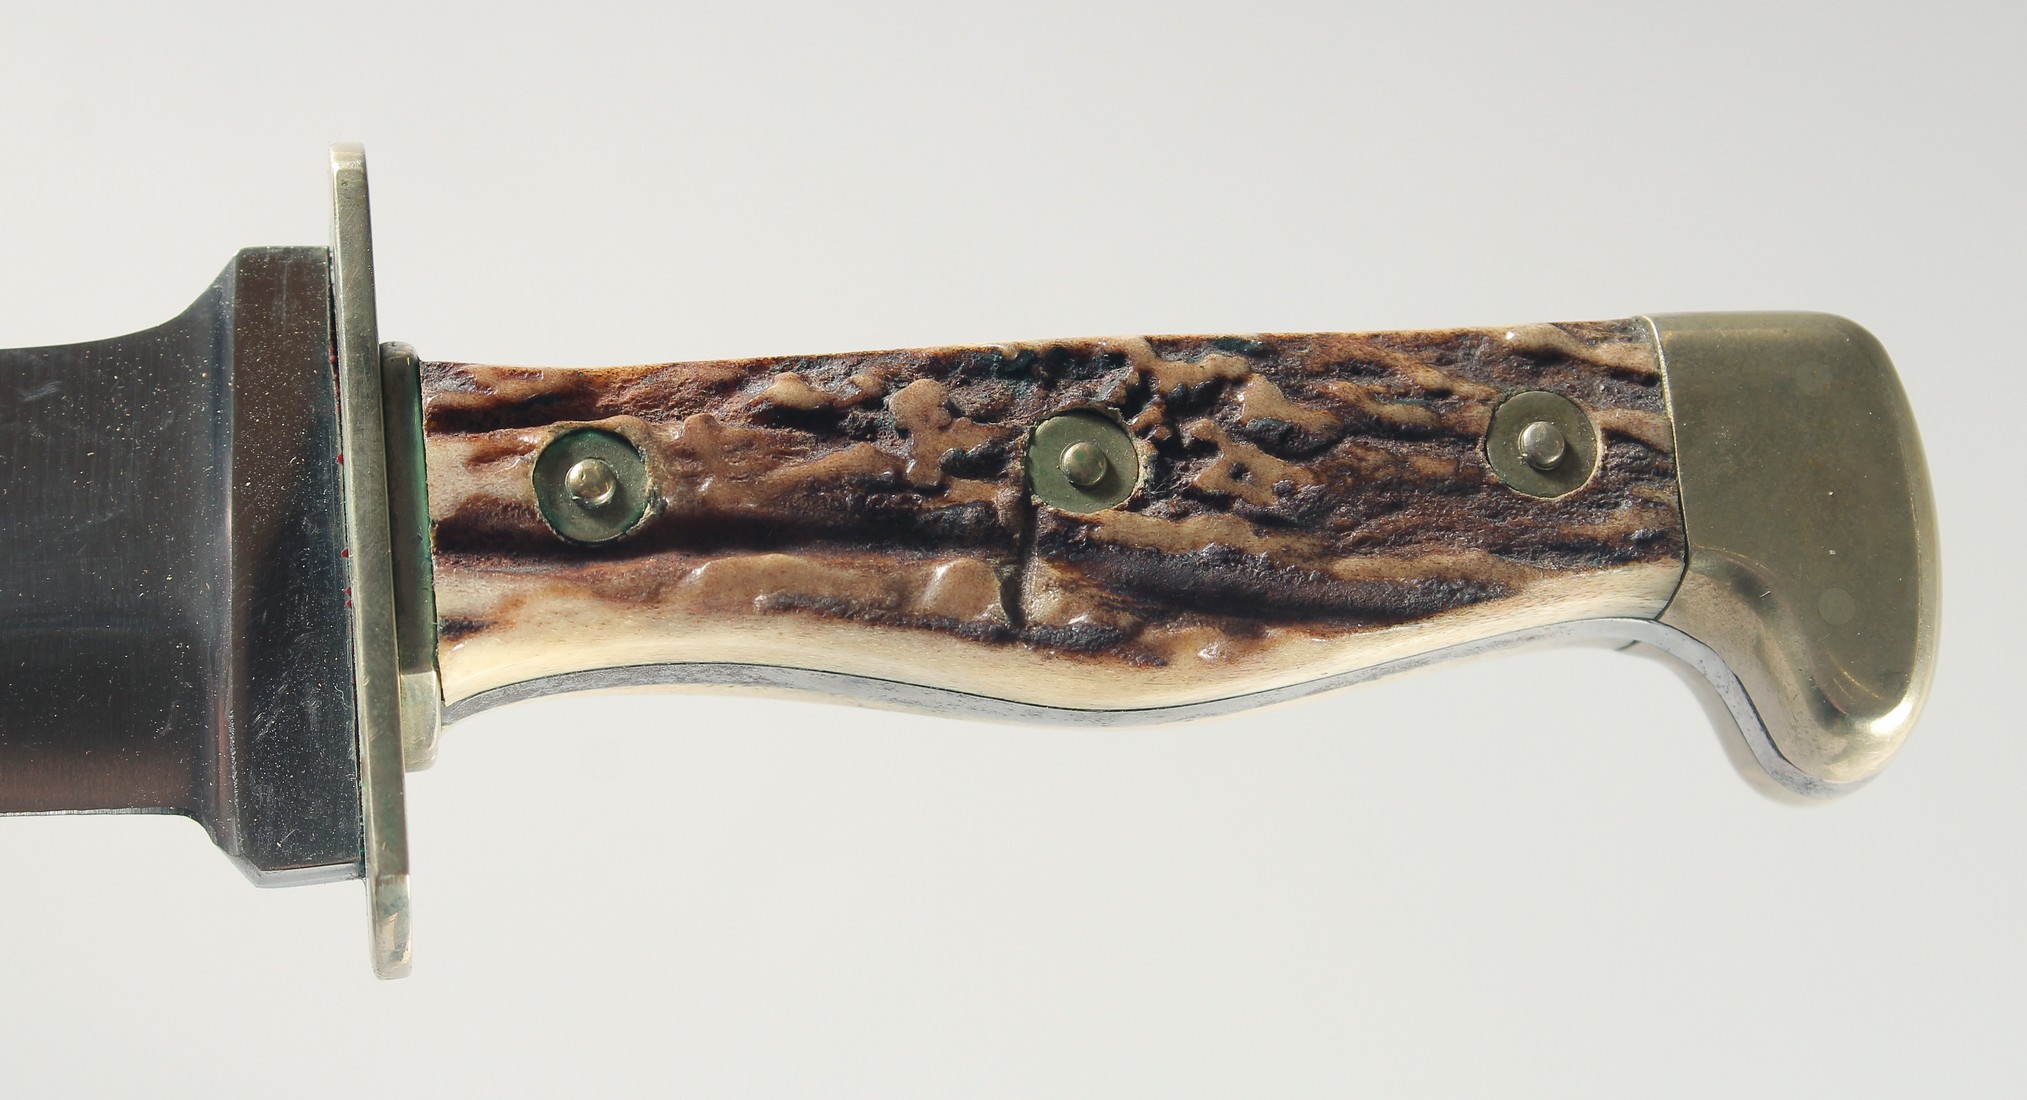 WAIDBLATT ORIGINAL EICKHORN SOLINGEN KNIFE, with antler handle, 13" long, in a leather sheath. - Image 3 of 5